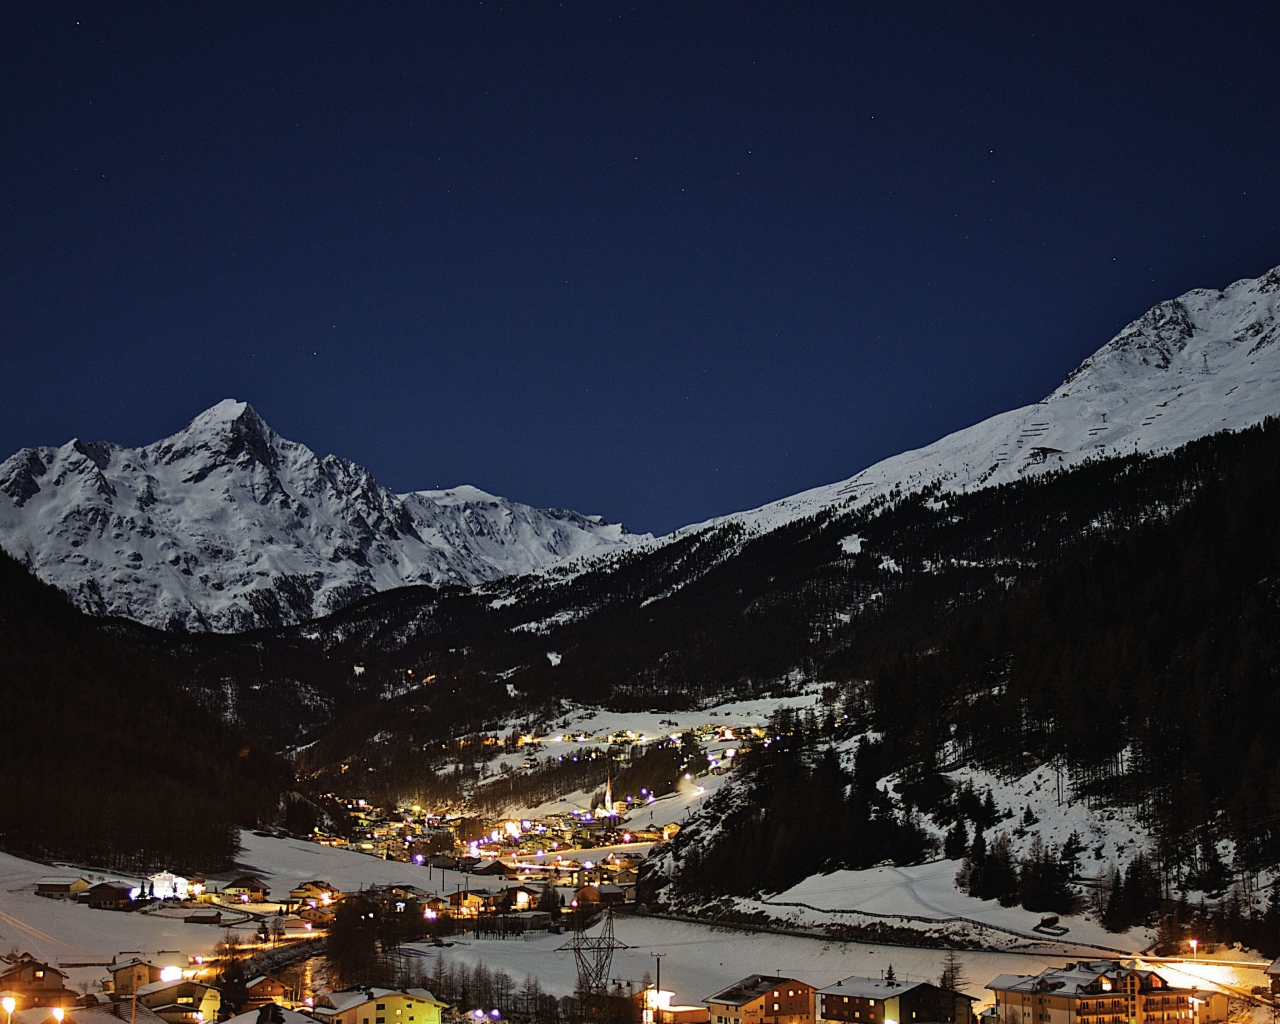 Night at the ski resort of Solden, Austria